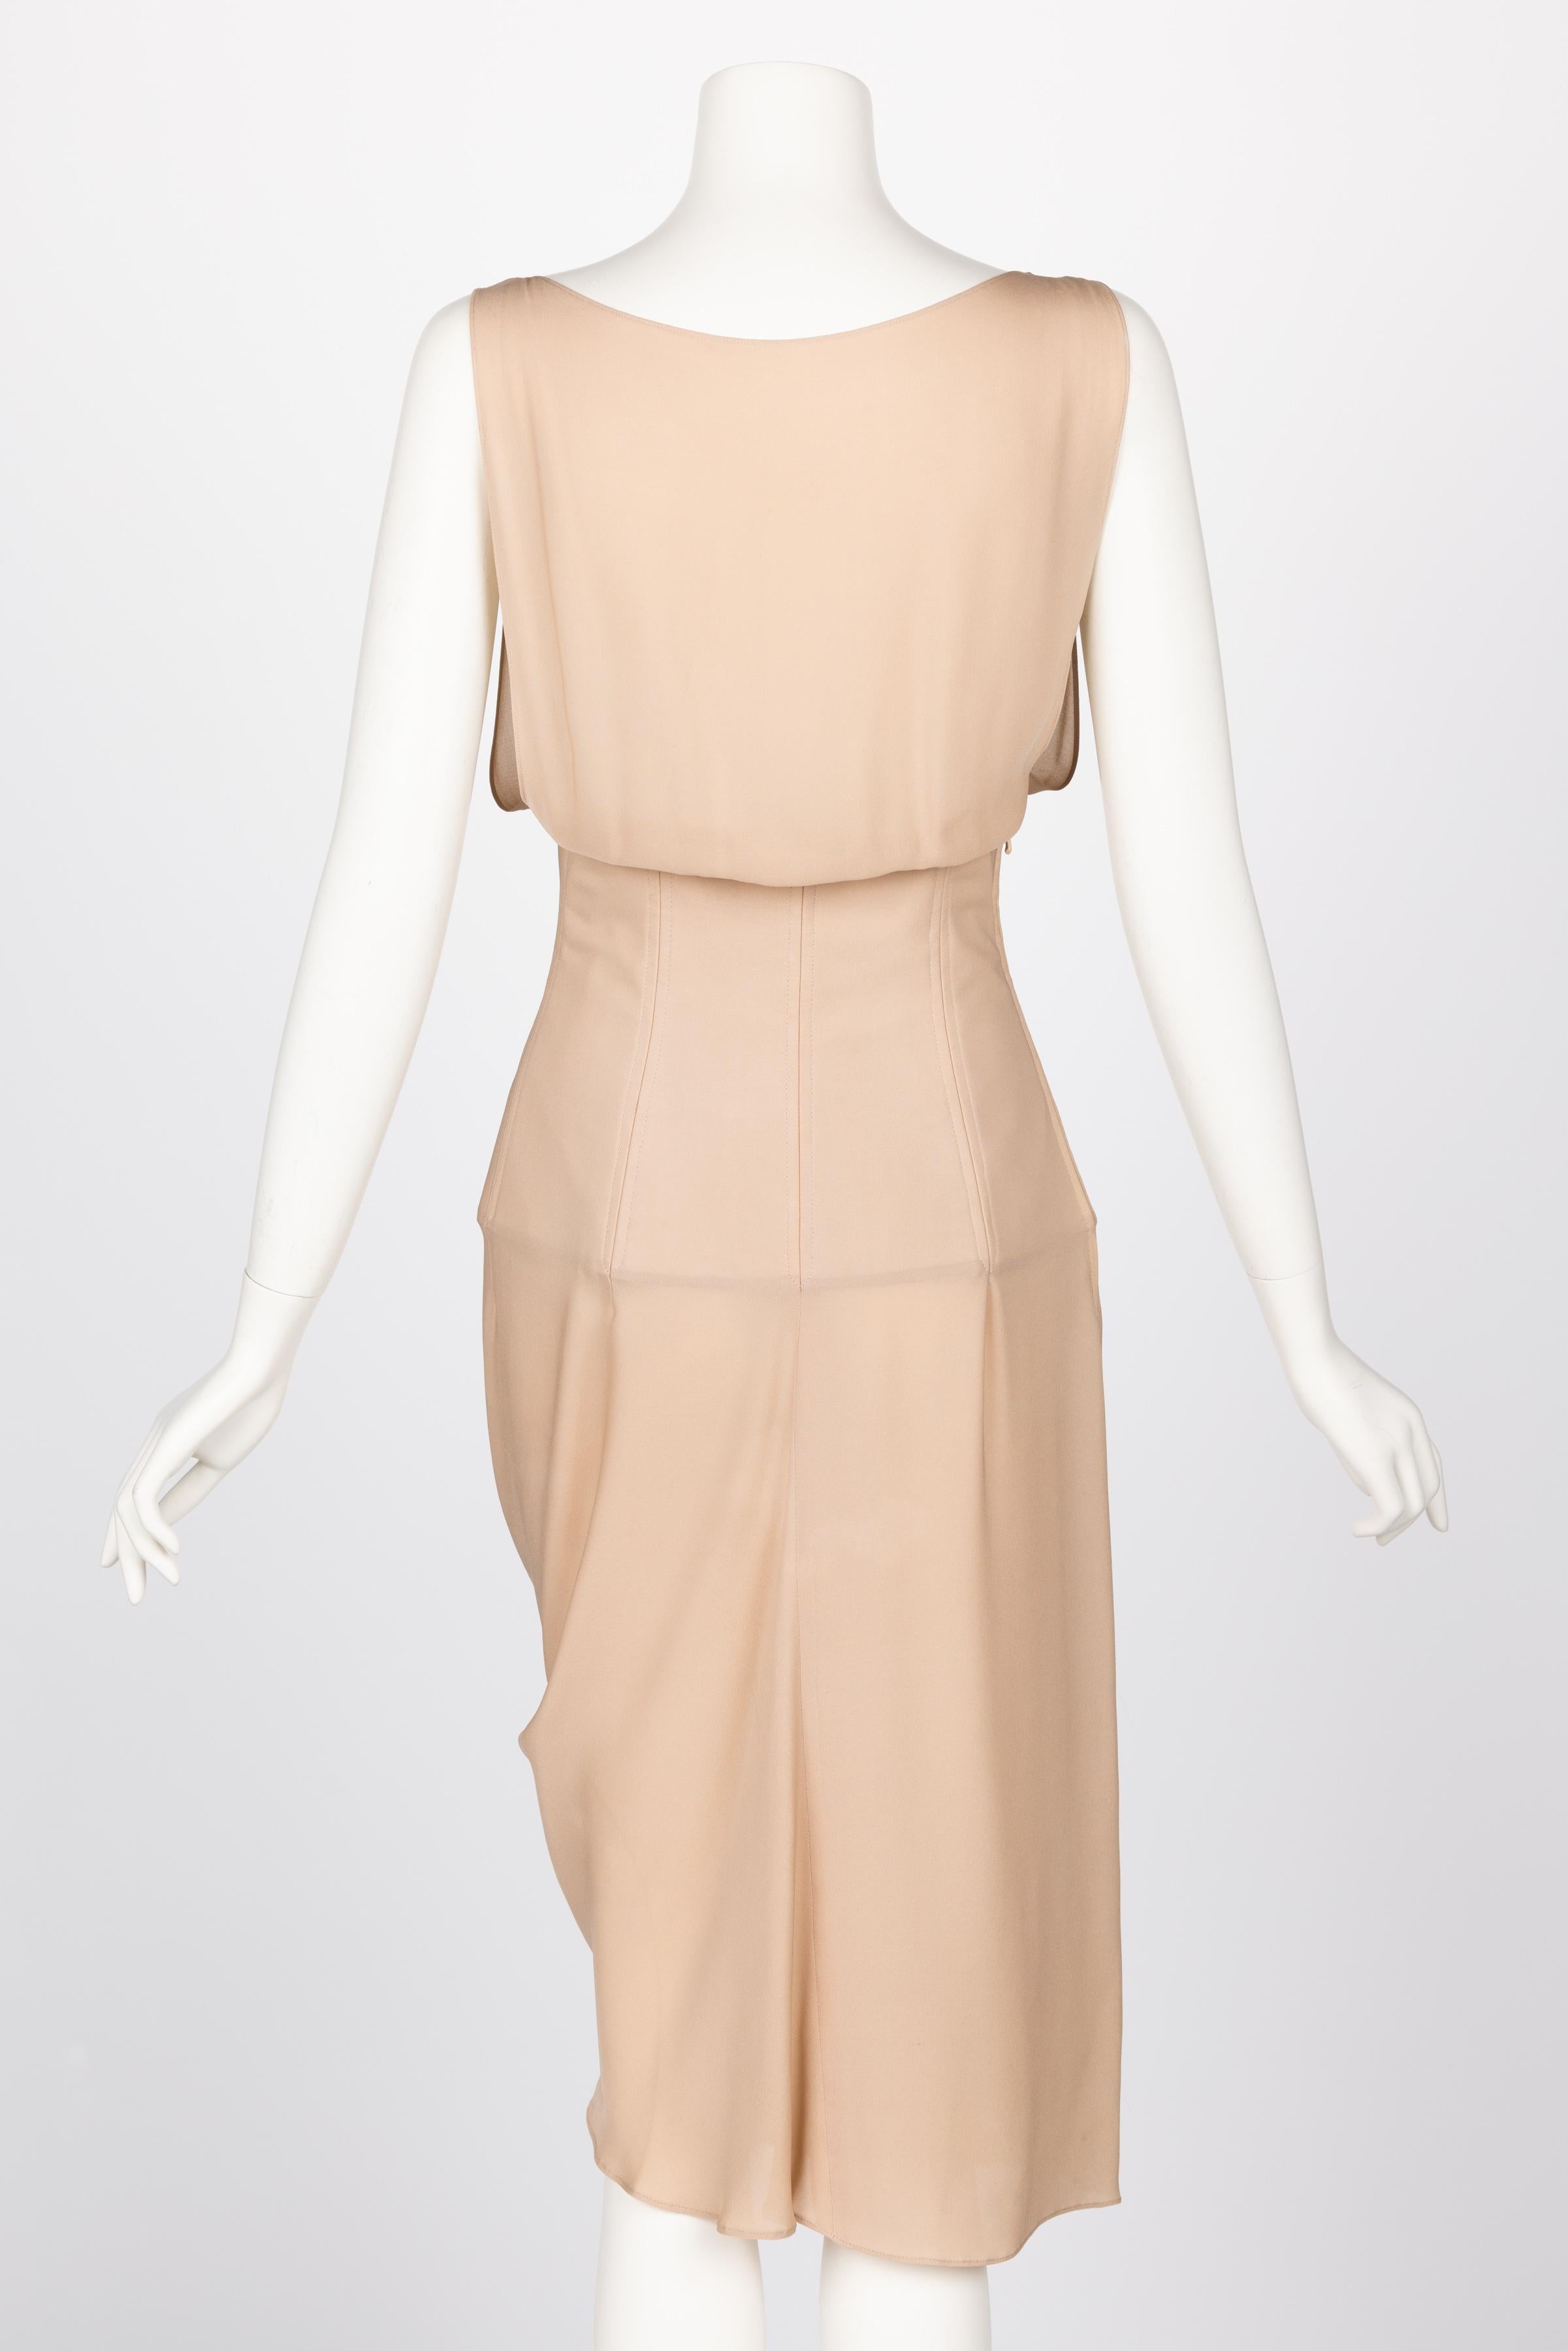 Chloé Stella McCartney F/W 2001 Draped Silk Face Corset Dress For Sale 1